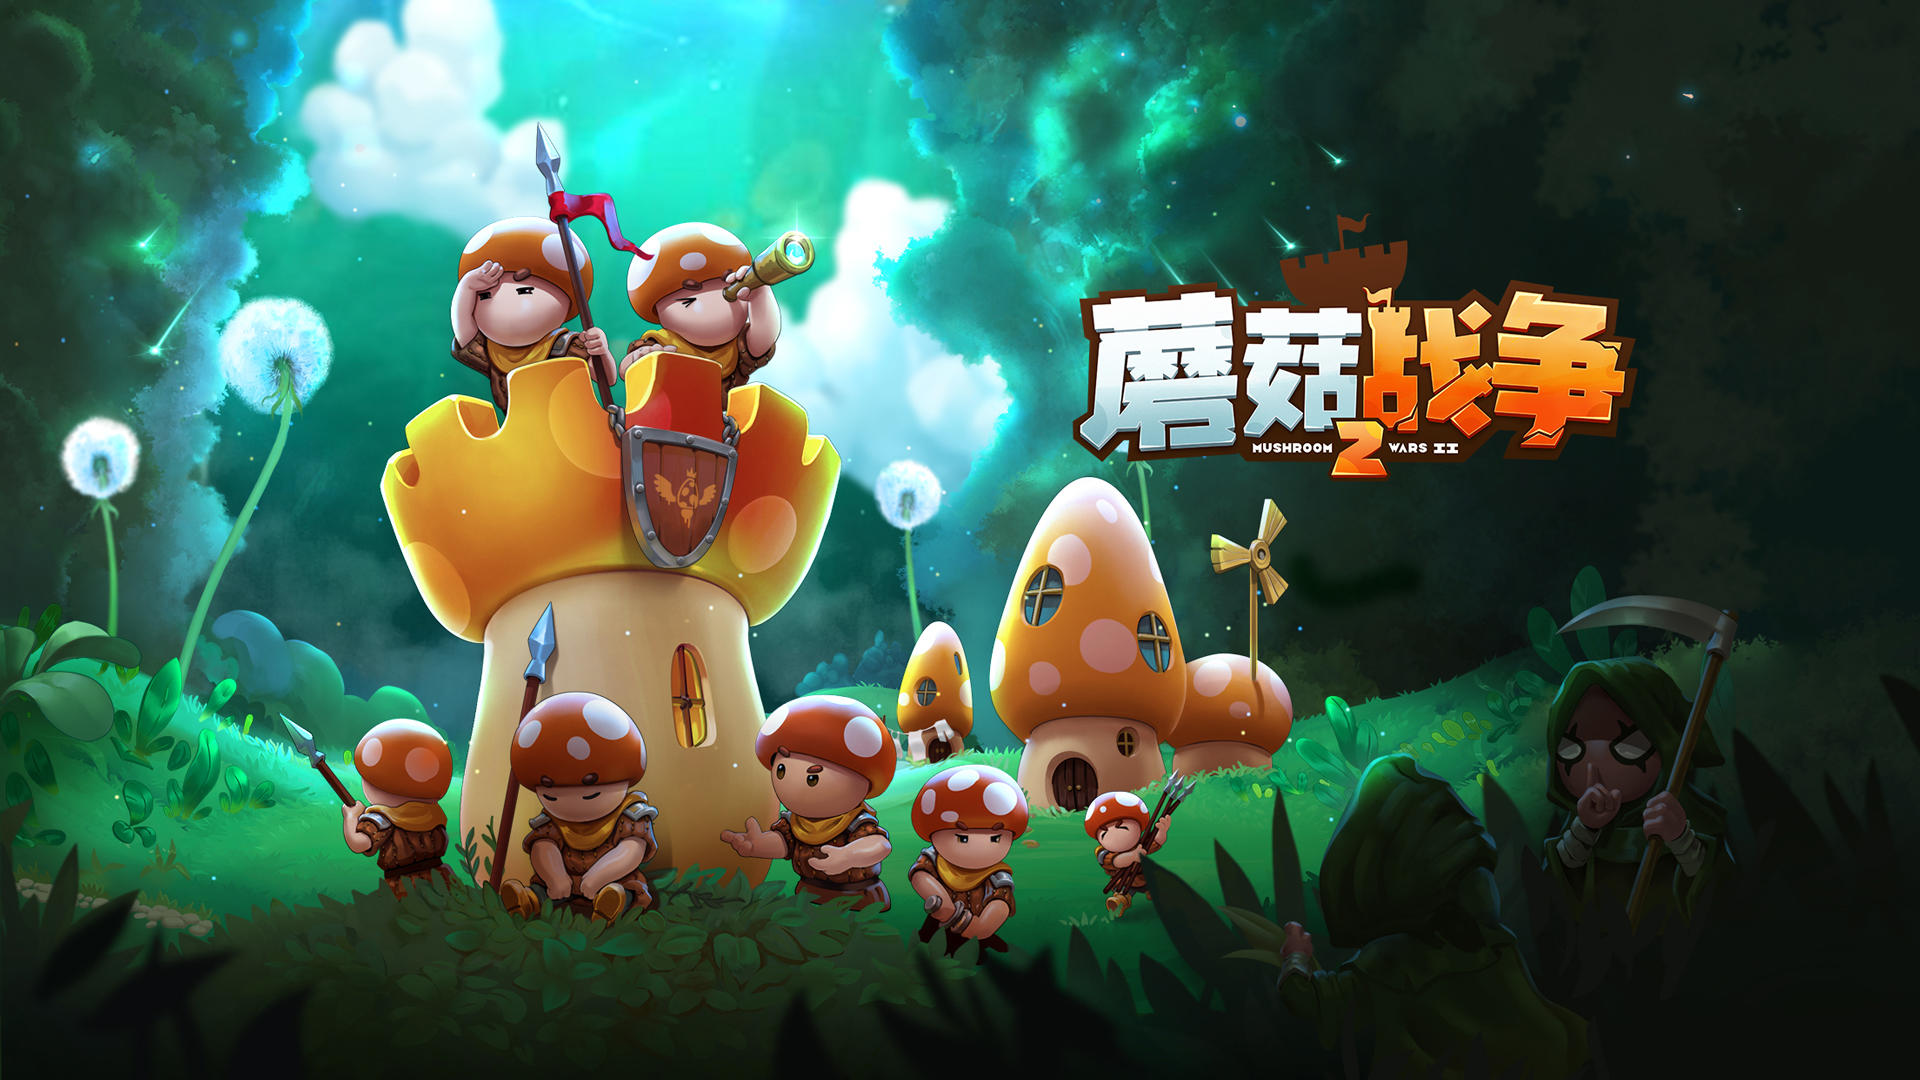 Banner of Mushroom Wars 2: เกมป้องกัน 